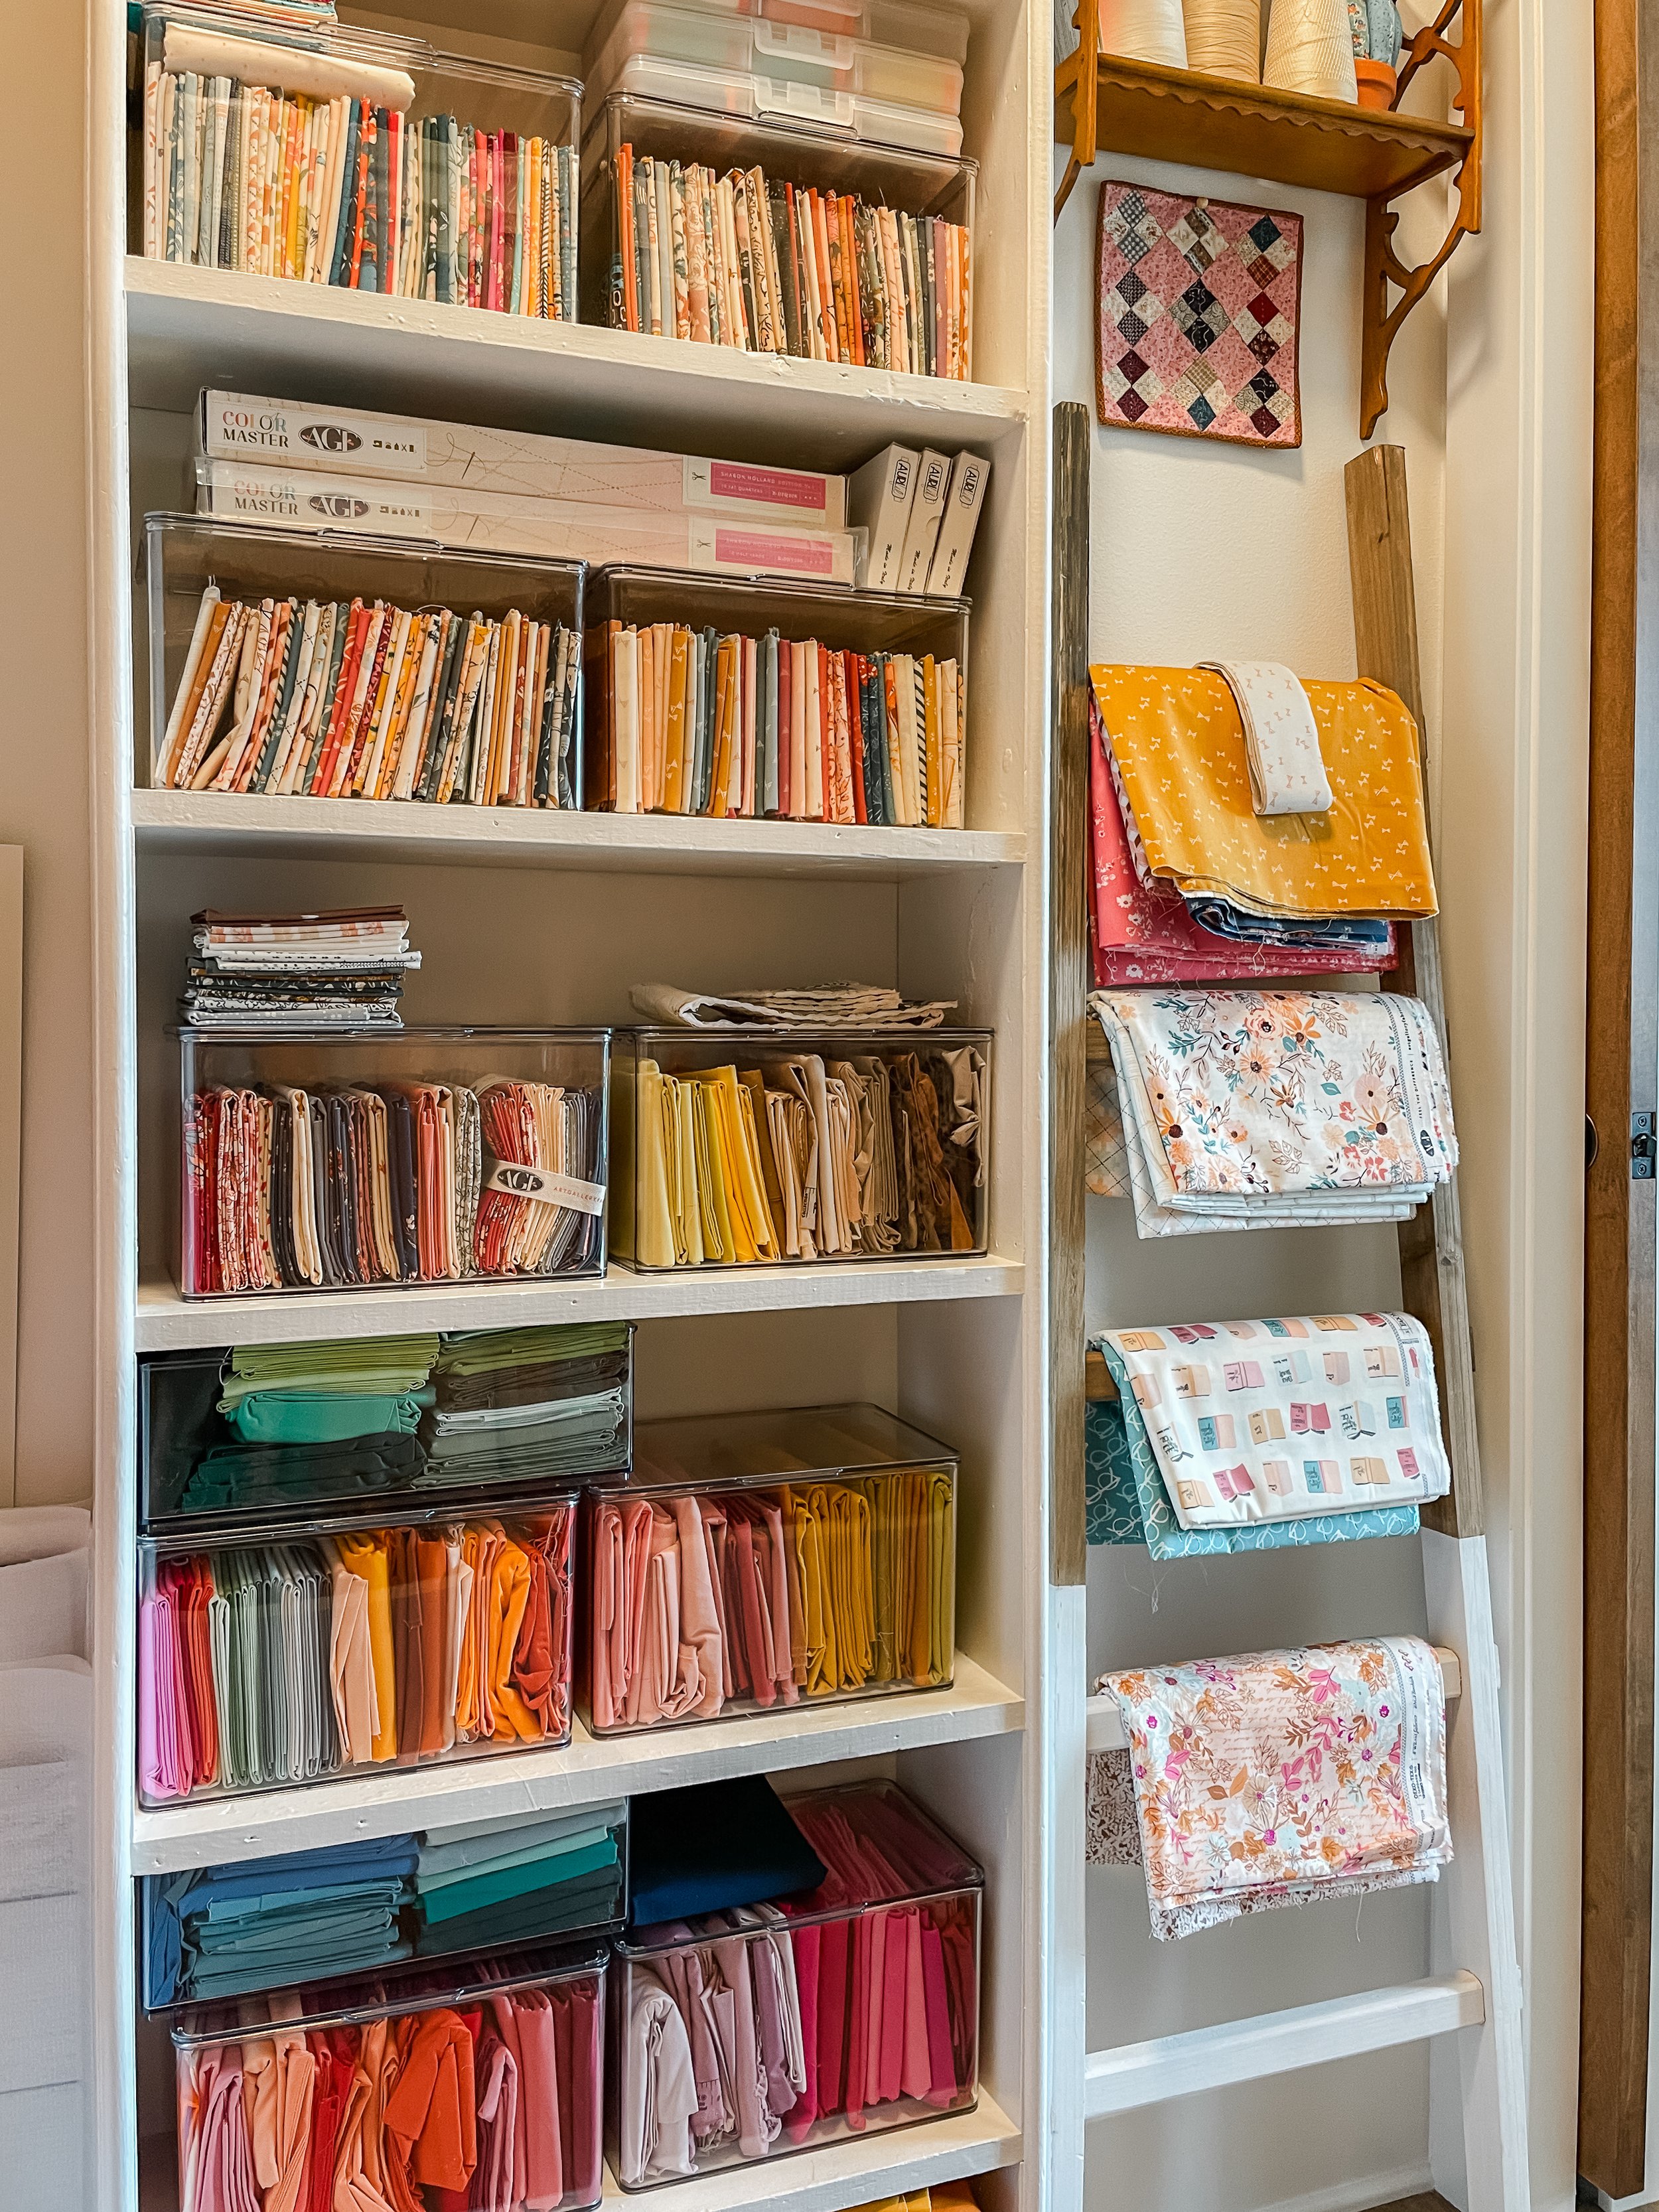 My 20 Favorite Journaling Bible Supplies - the thinking closet